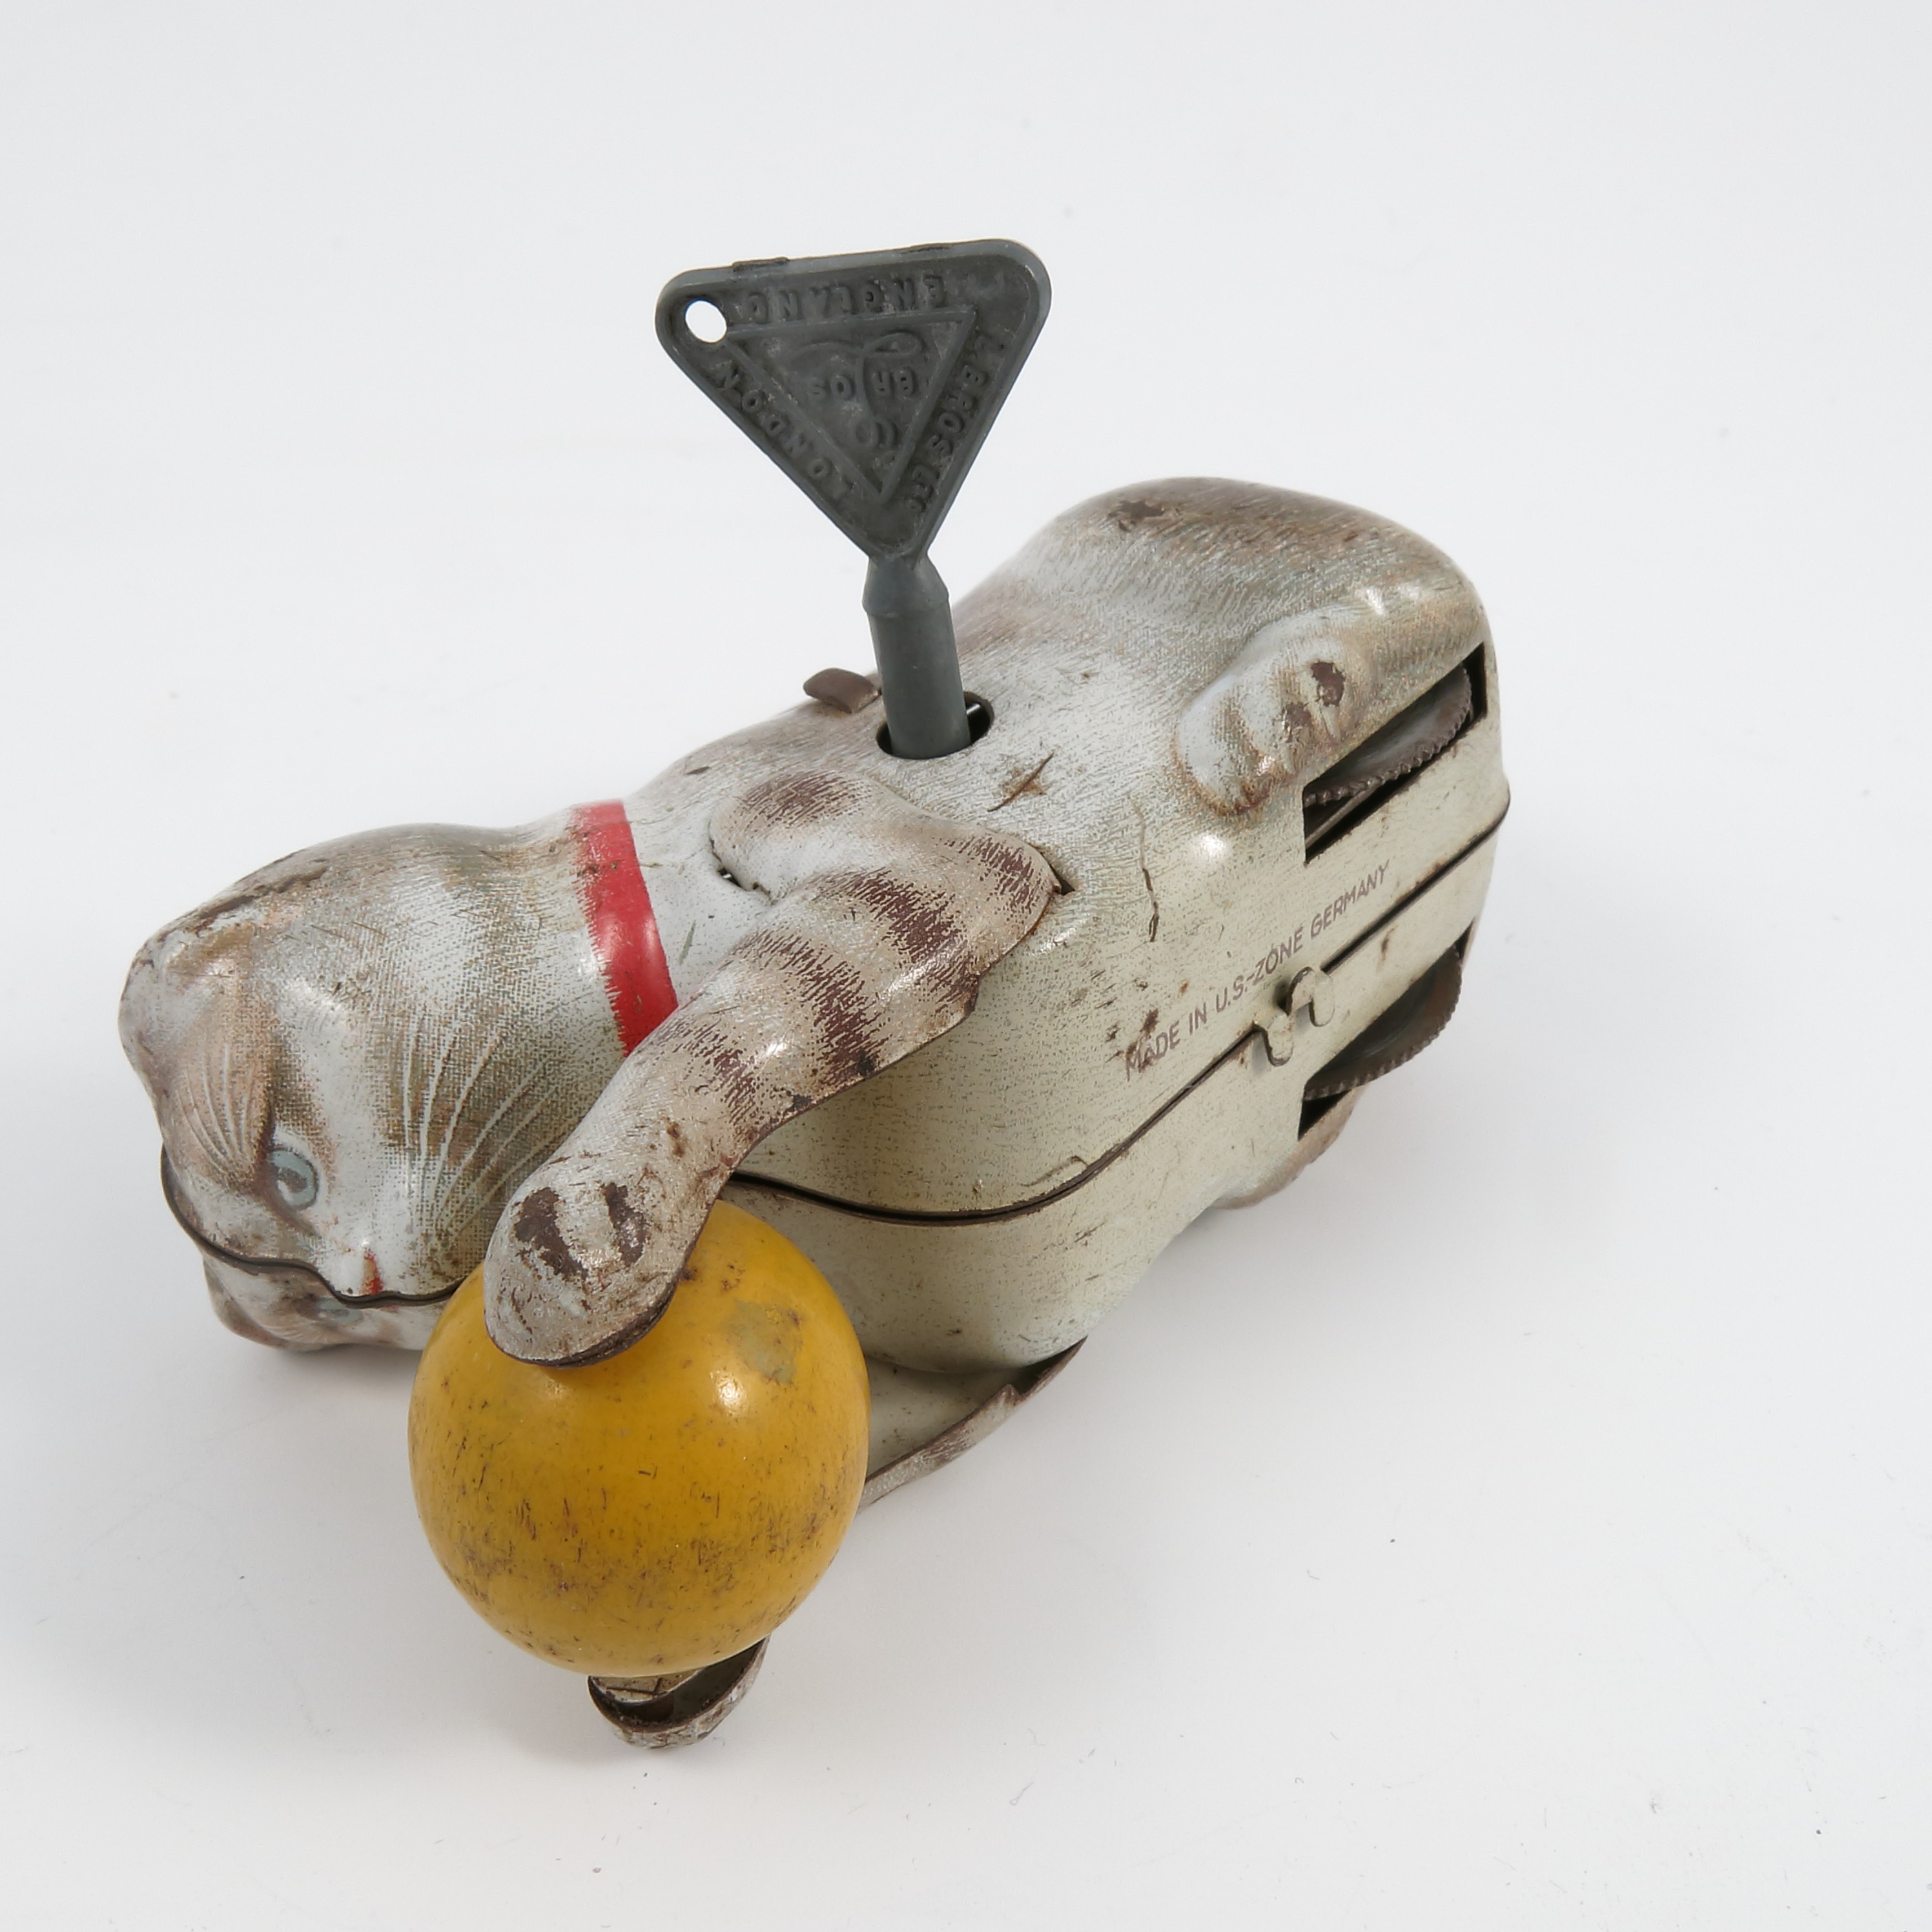 A Kohler Toys tinplate clockwork toy,made in U. - Image 2 of 3